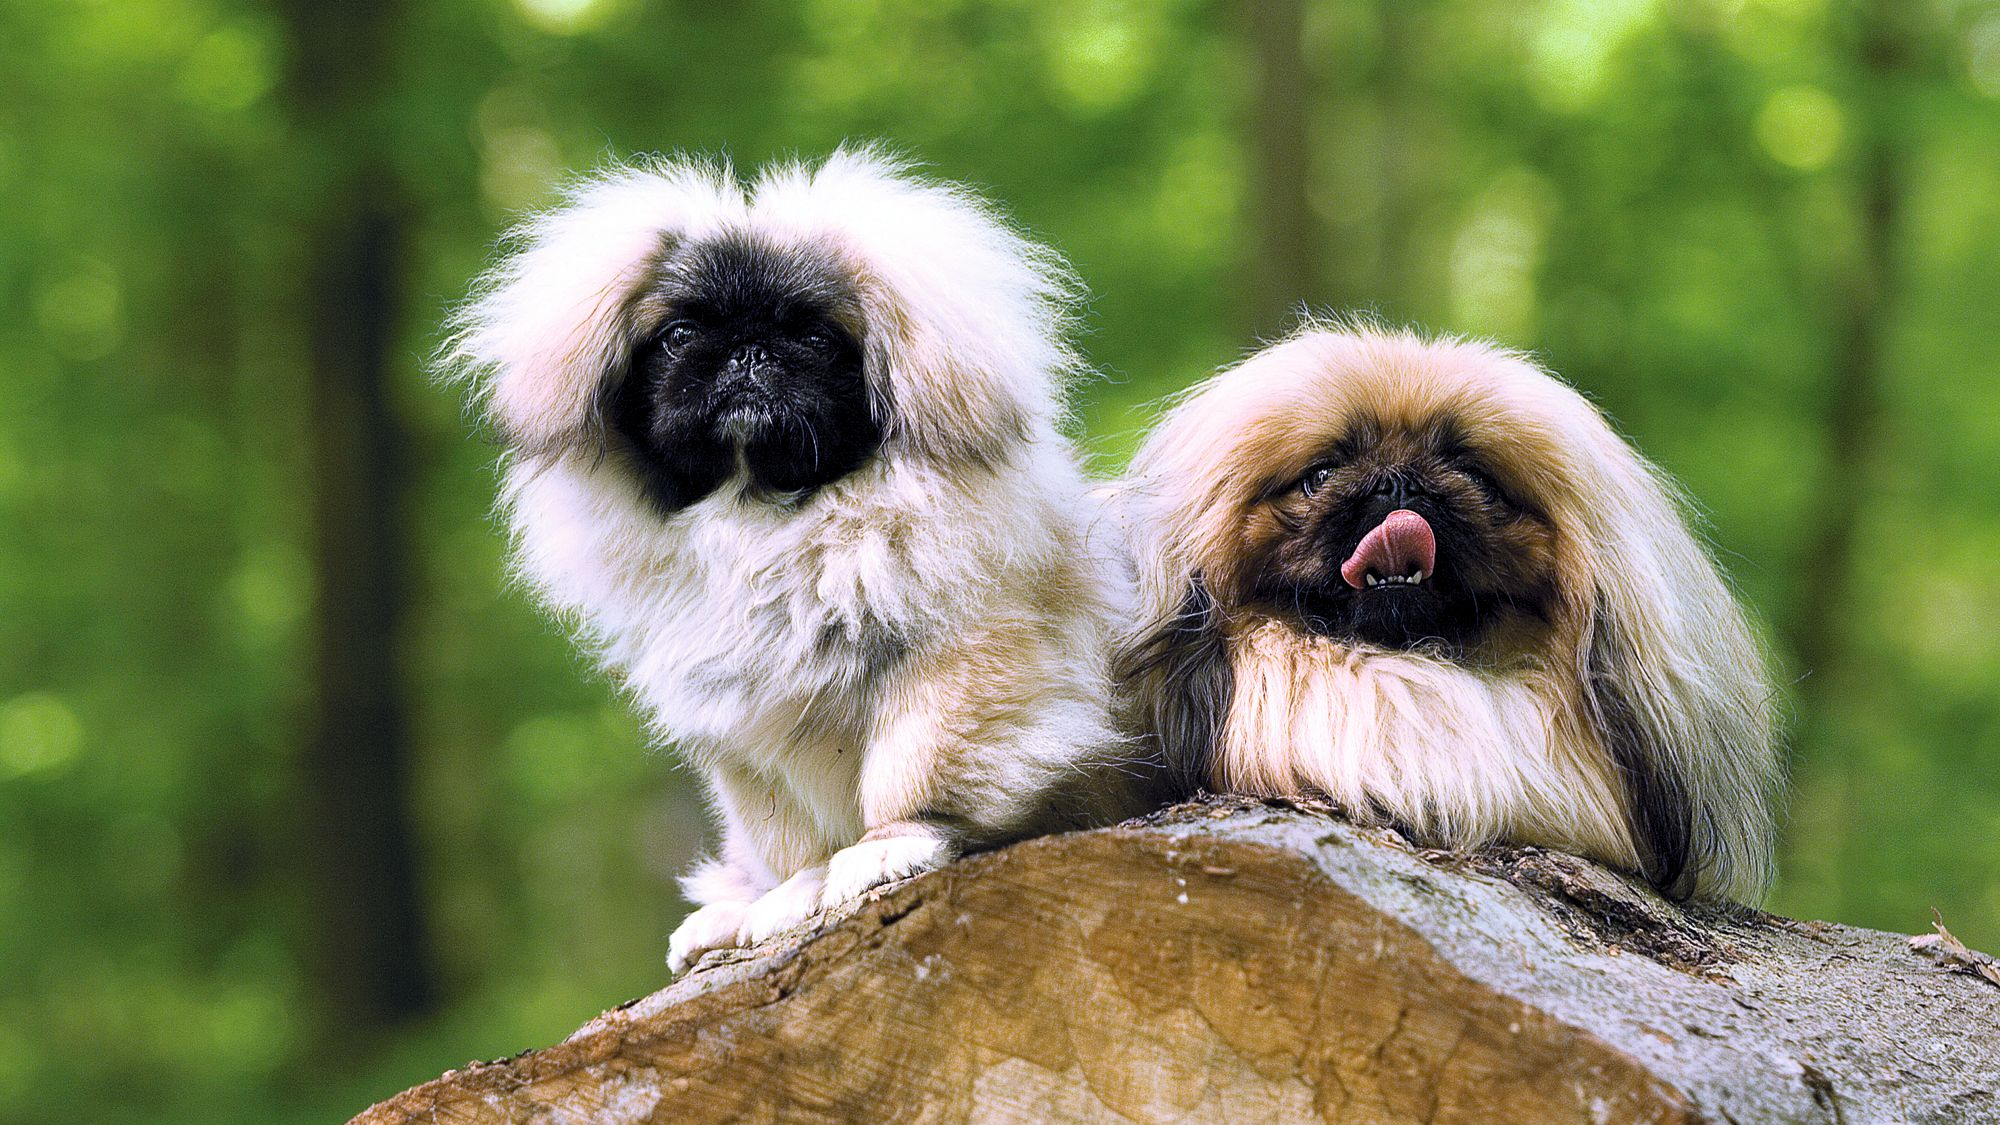 Two Pekinese dogs sat on a tree stump